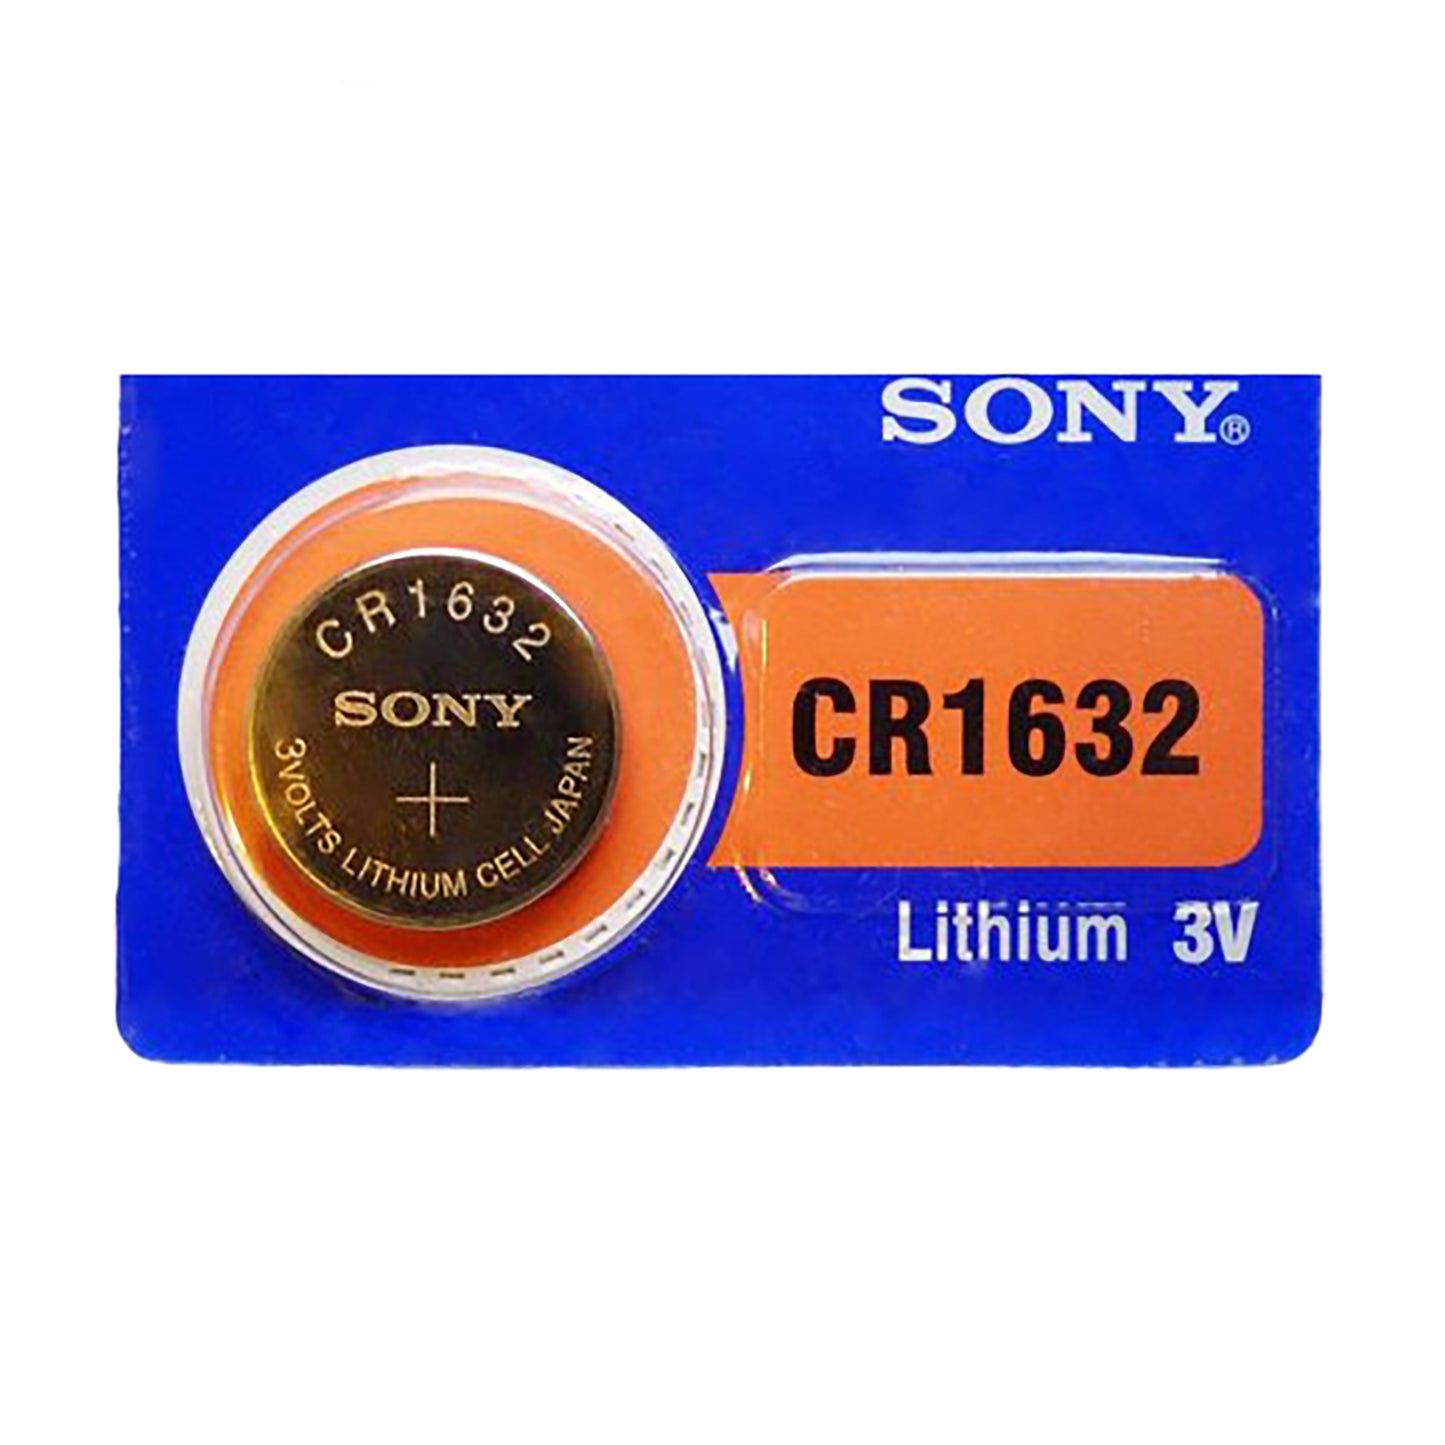 SON-CR1632-1 - батарейка Sony CR1632, 3 В (1 шт. в блистере)